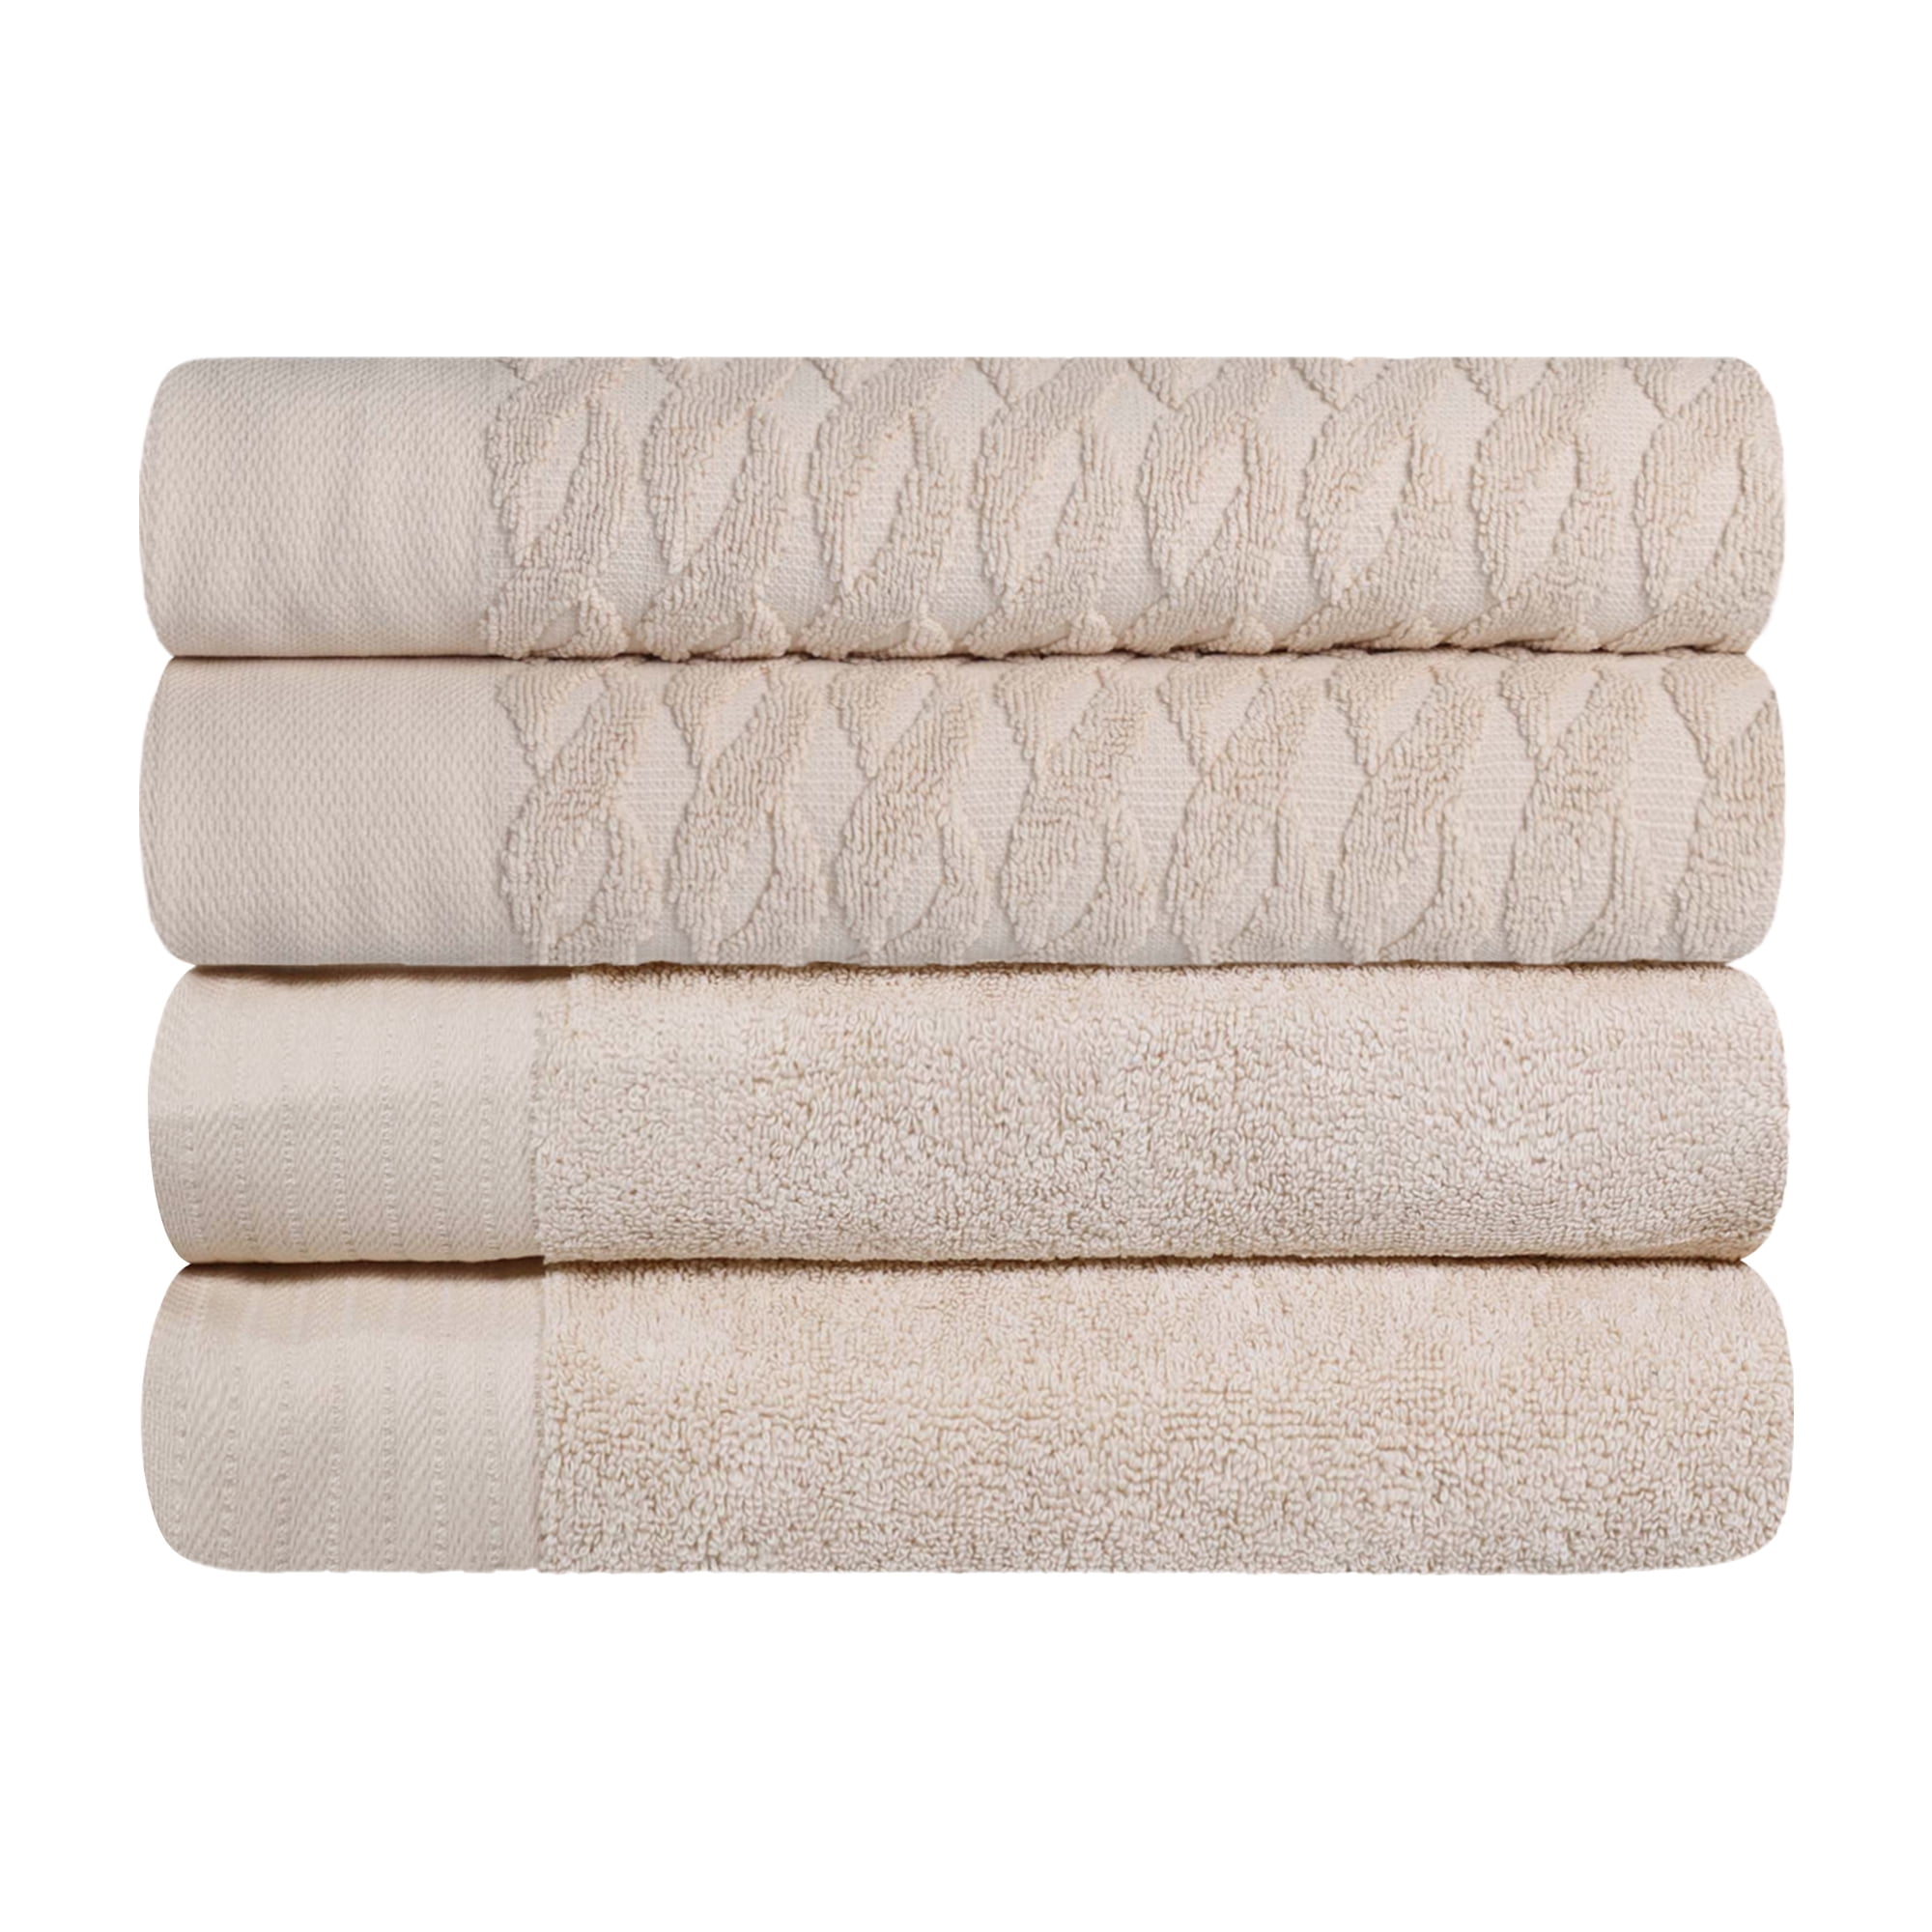 Superior Cotton Jacquard Absorbent Medium Weight 4 Piece Bath Towel Set - Ivory-Navy